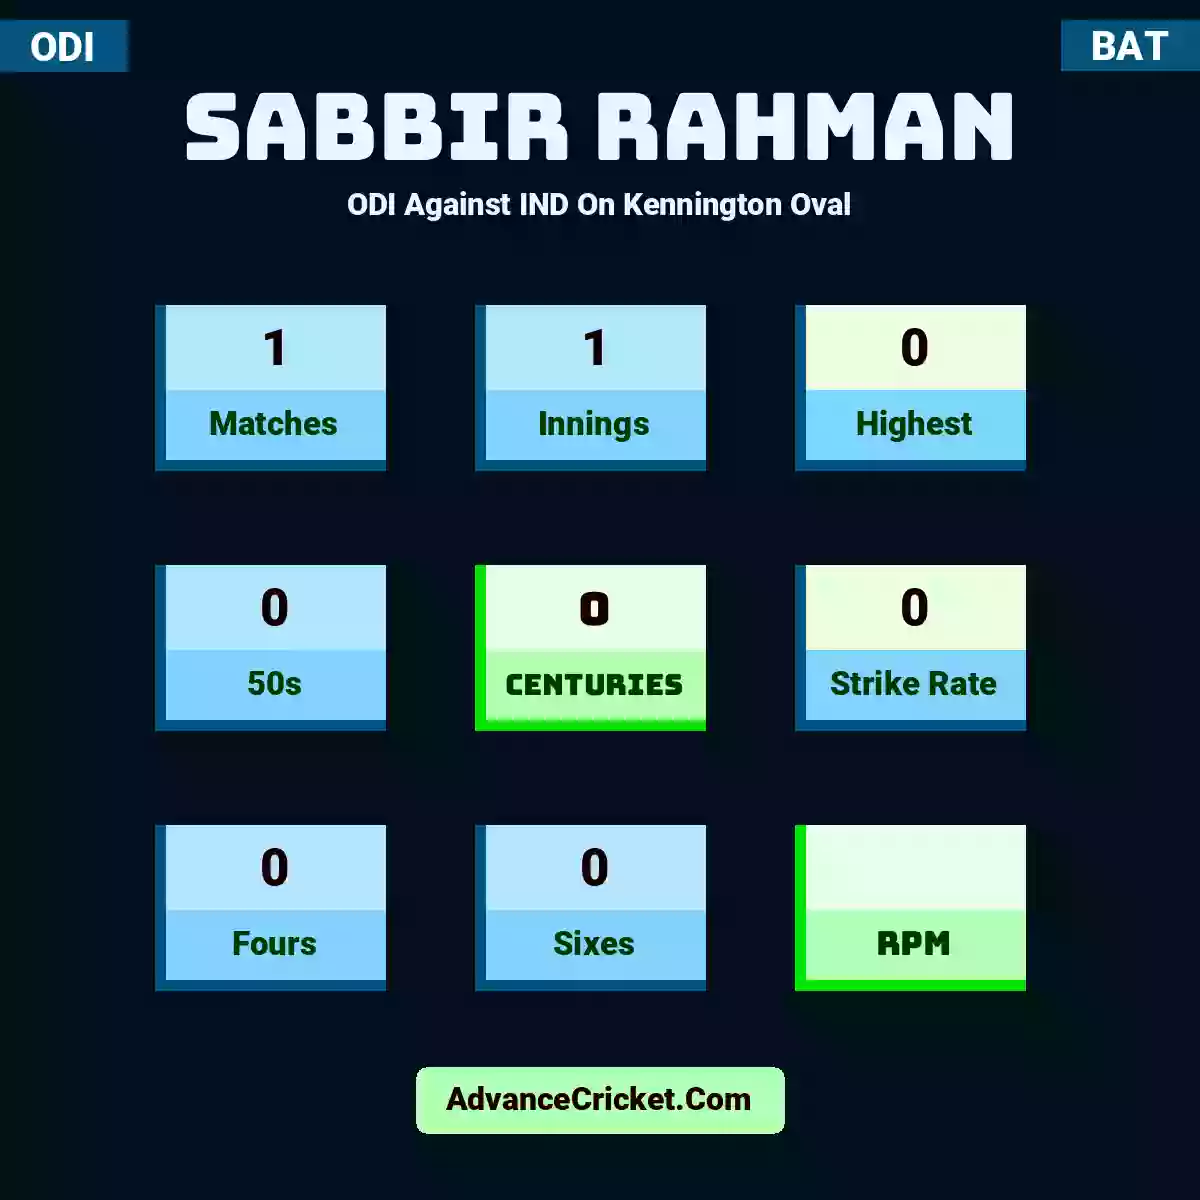 Sabbir Rahman ODI  Against IND On Kennington Oval, Sabbir Rahman played 1 matches, scored 0 runs as highest, 0 half-centuries, and 0 centuries, with a strike rate of 0. S.Rahman hit 0 fours and 0 sixes.